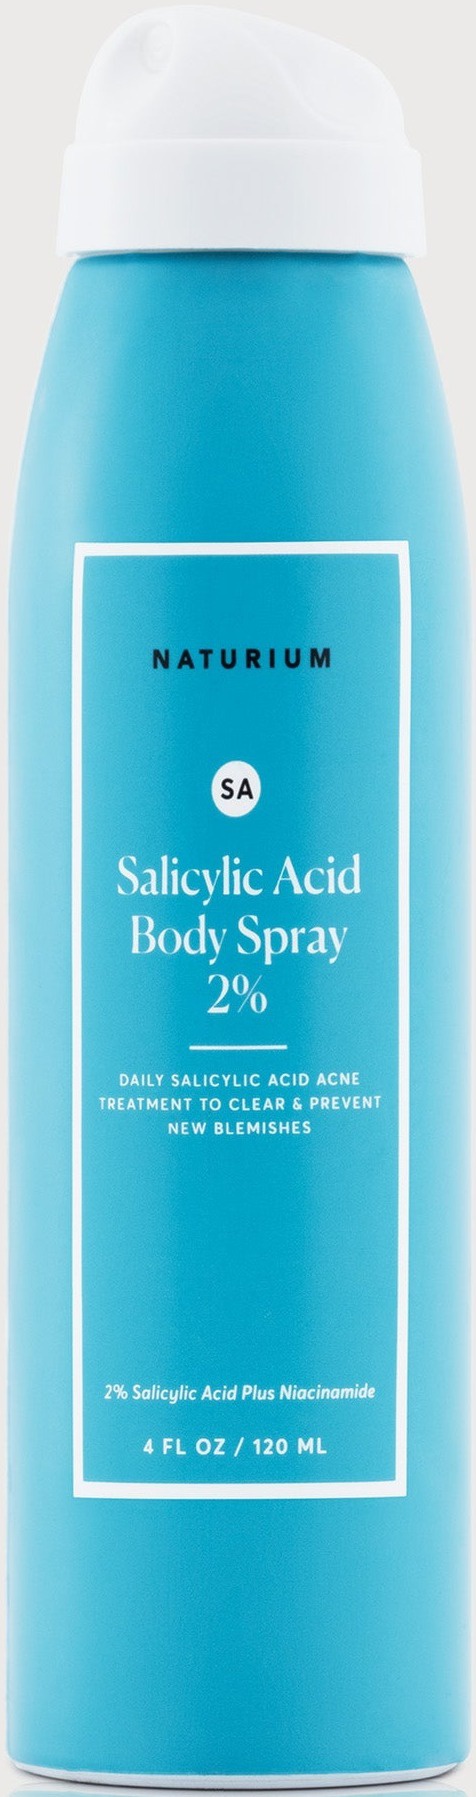 naturium Salicylic Acid Body Spray 2%